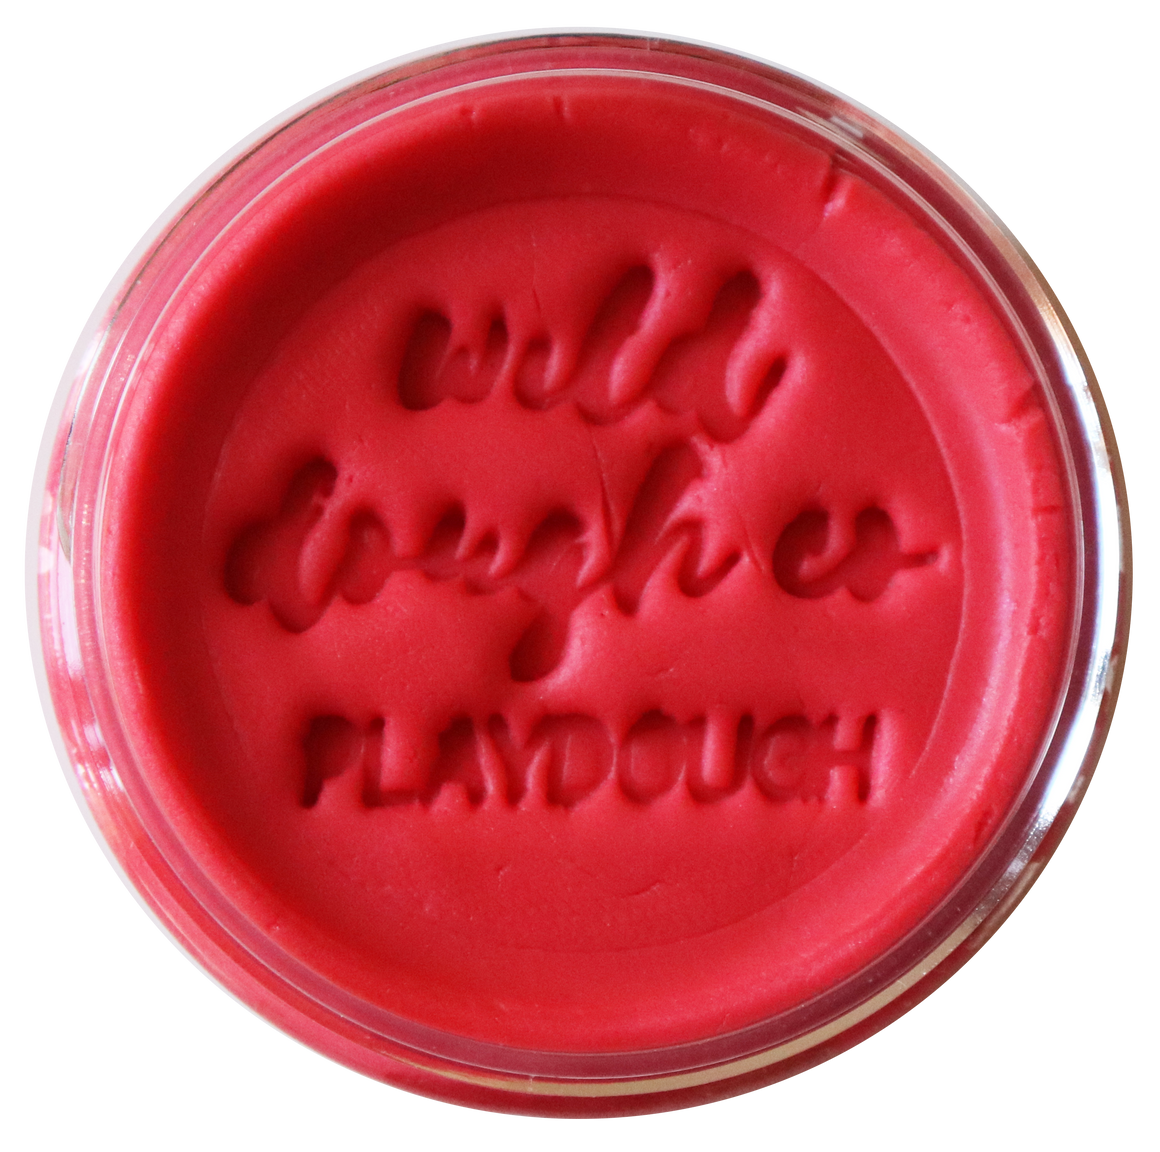 Ruldolph Red Playdough